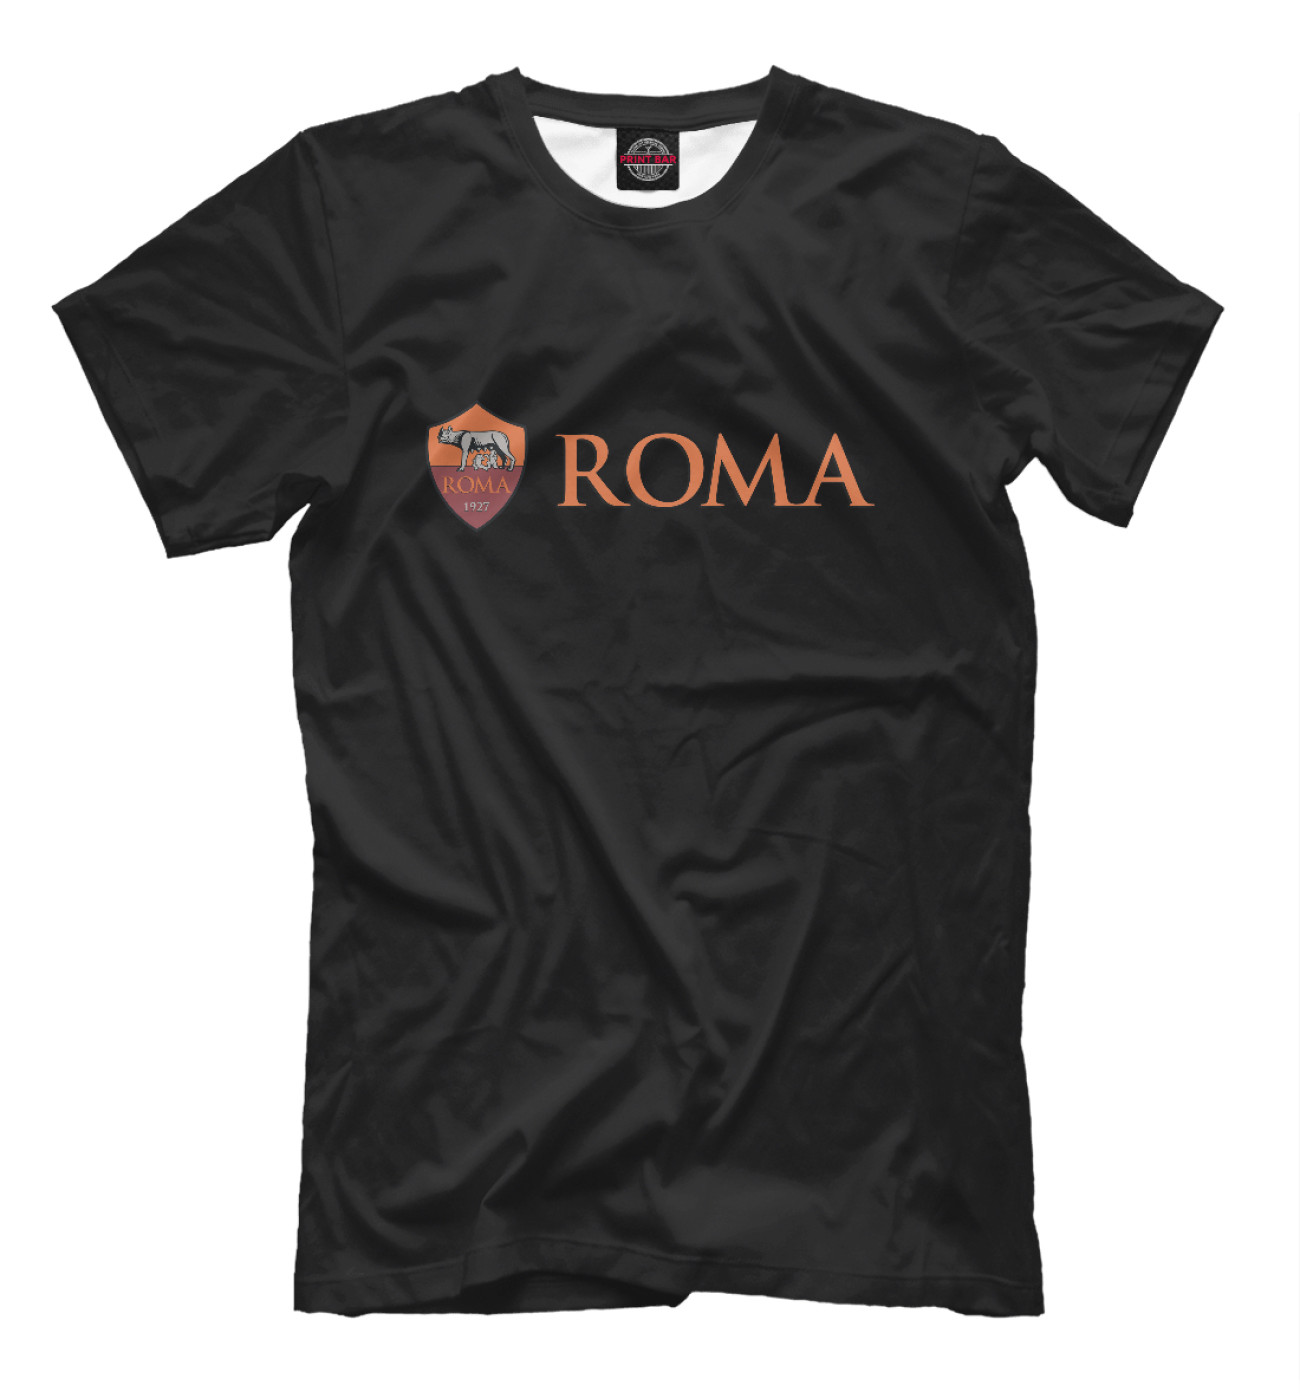 Мужская Футболка Roma, артикул: RMA-845725-fut-2